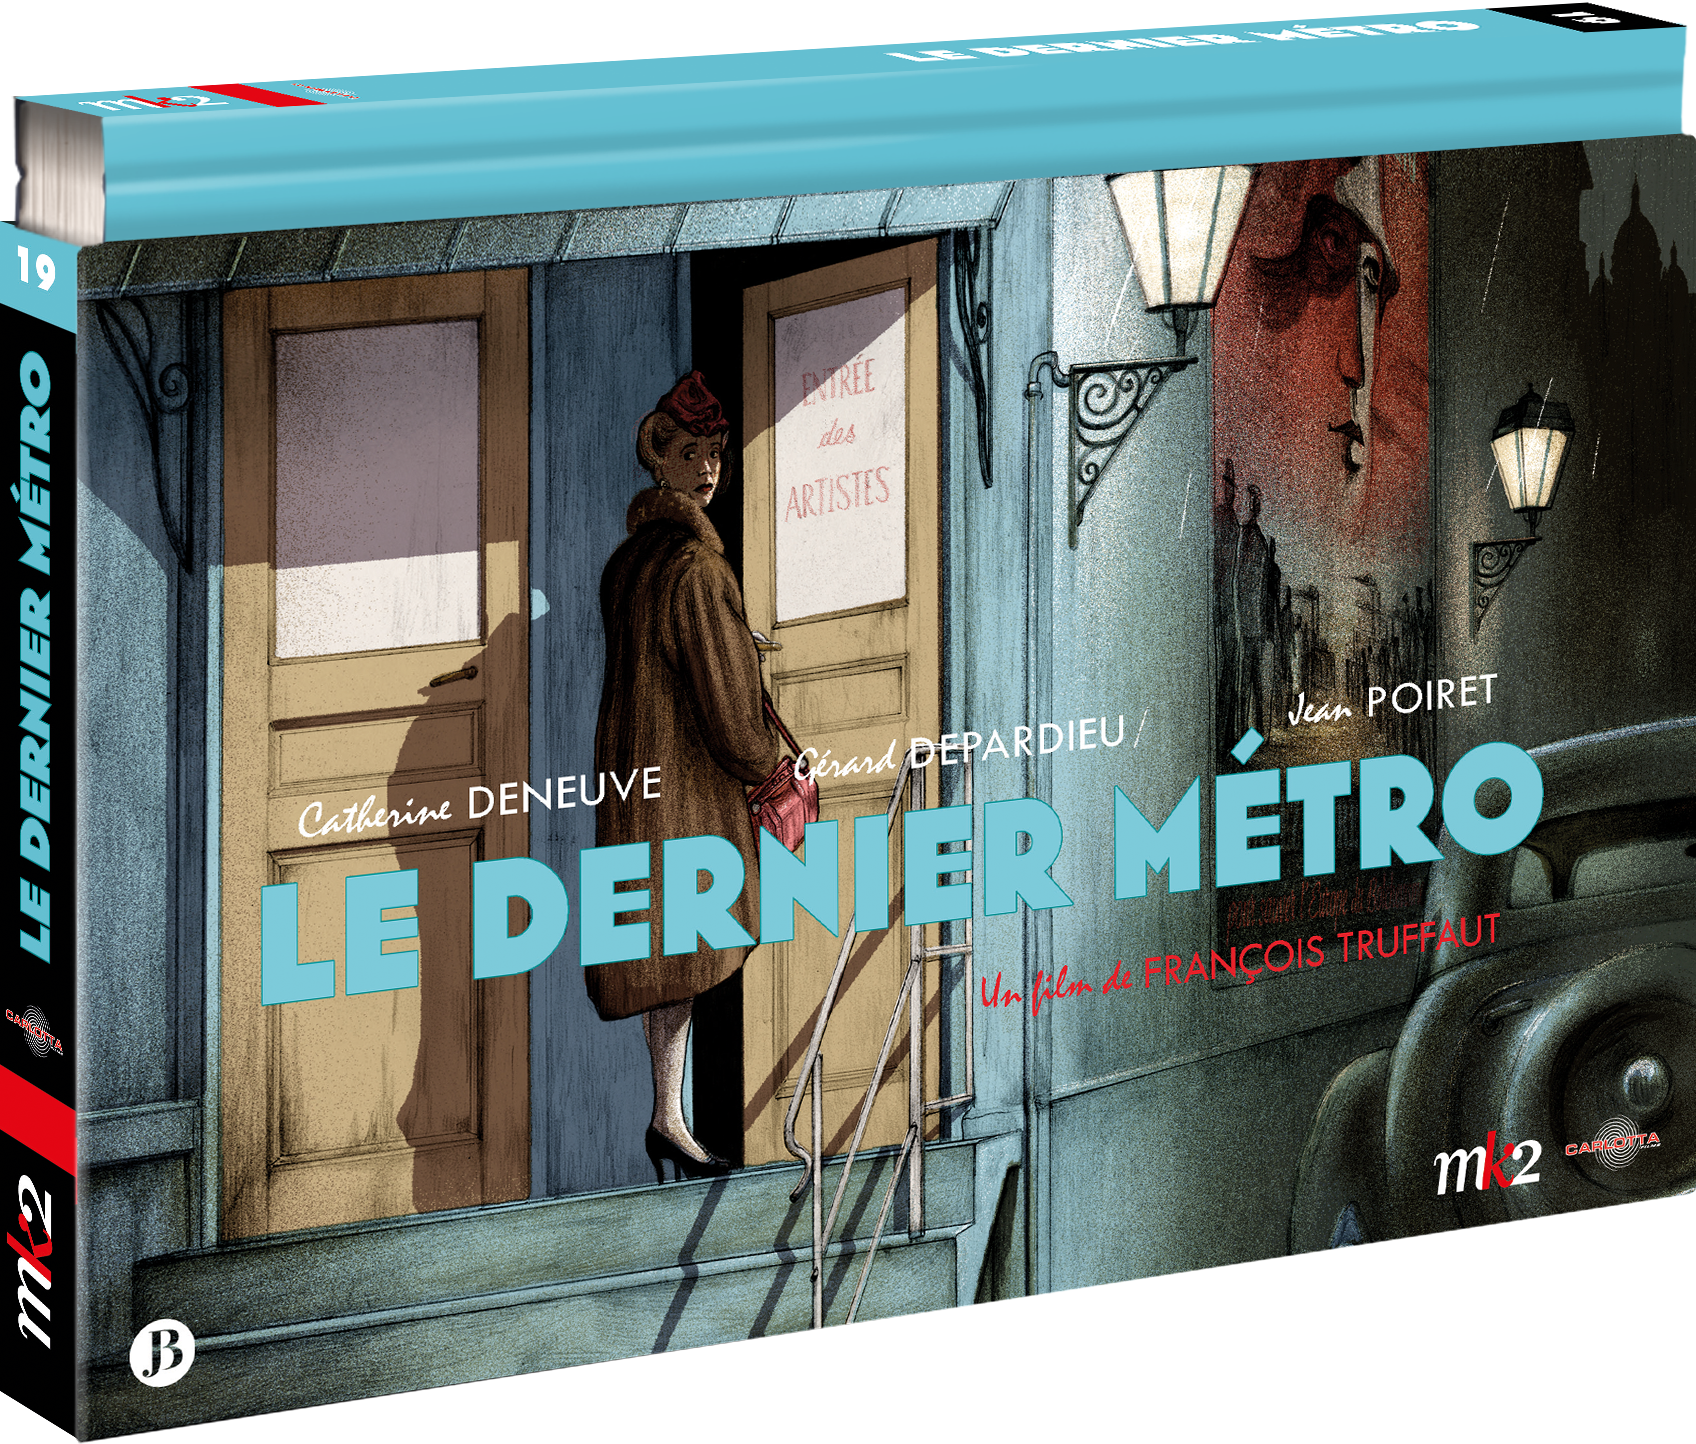 Le Dernier Métro - Coffret Ultra Collector 19 - Blu-ray + DVD + Livre